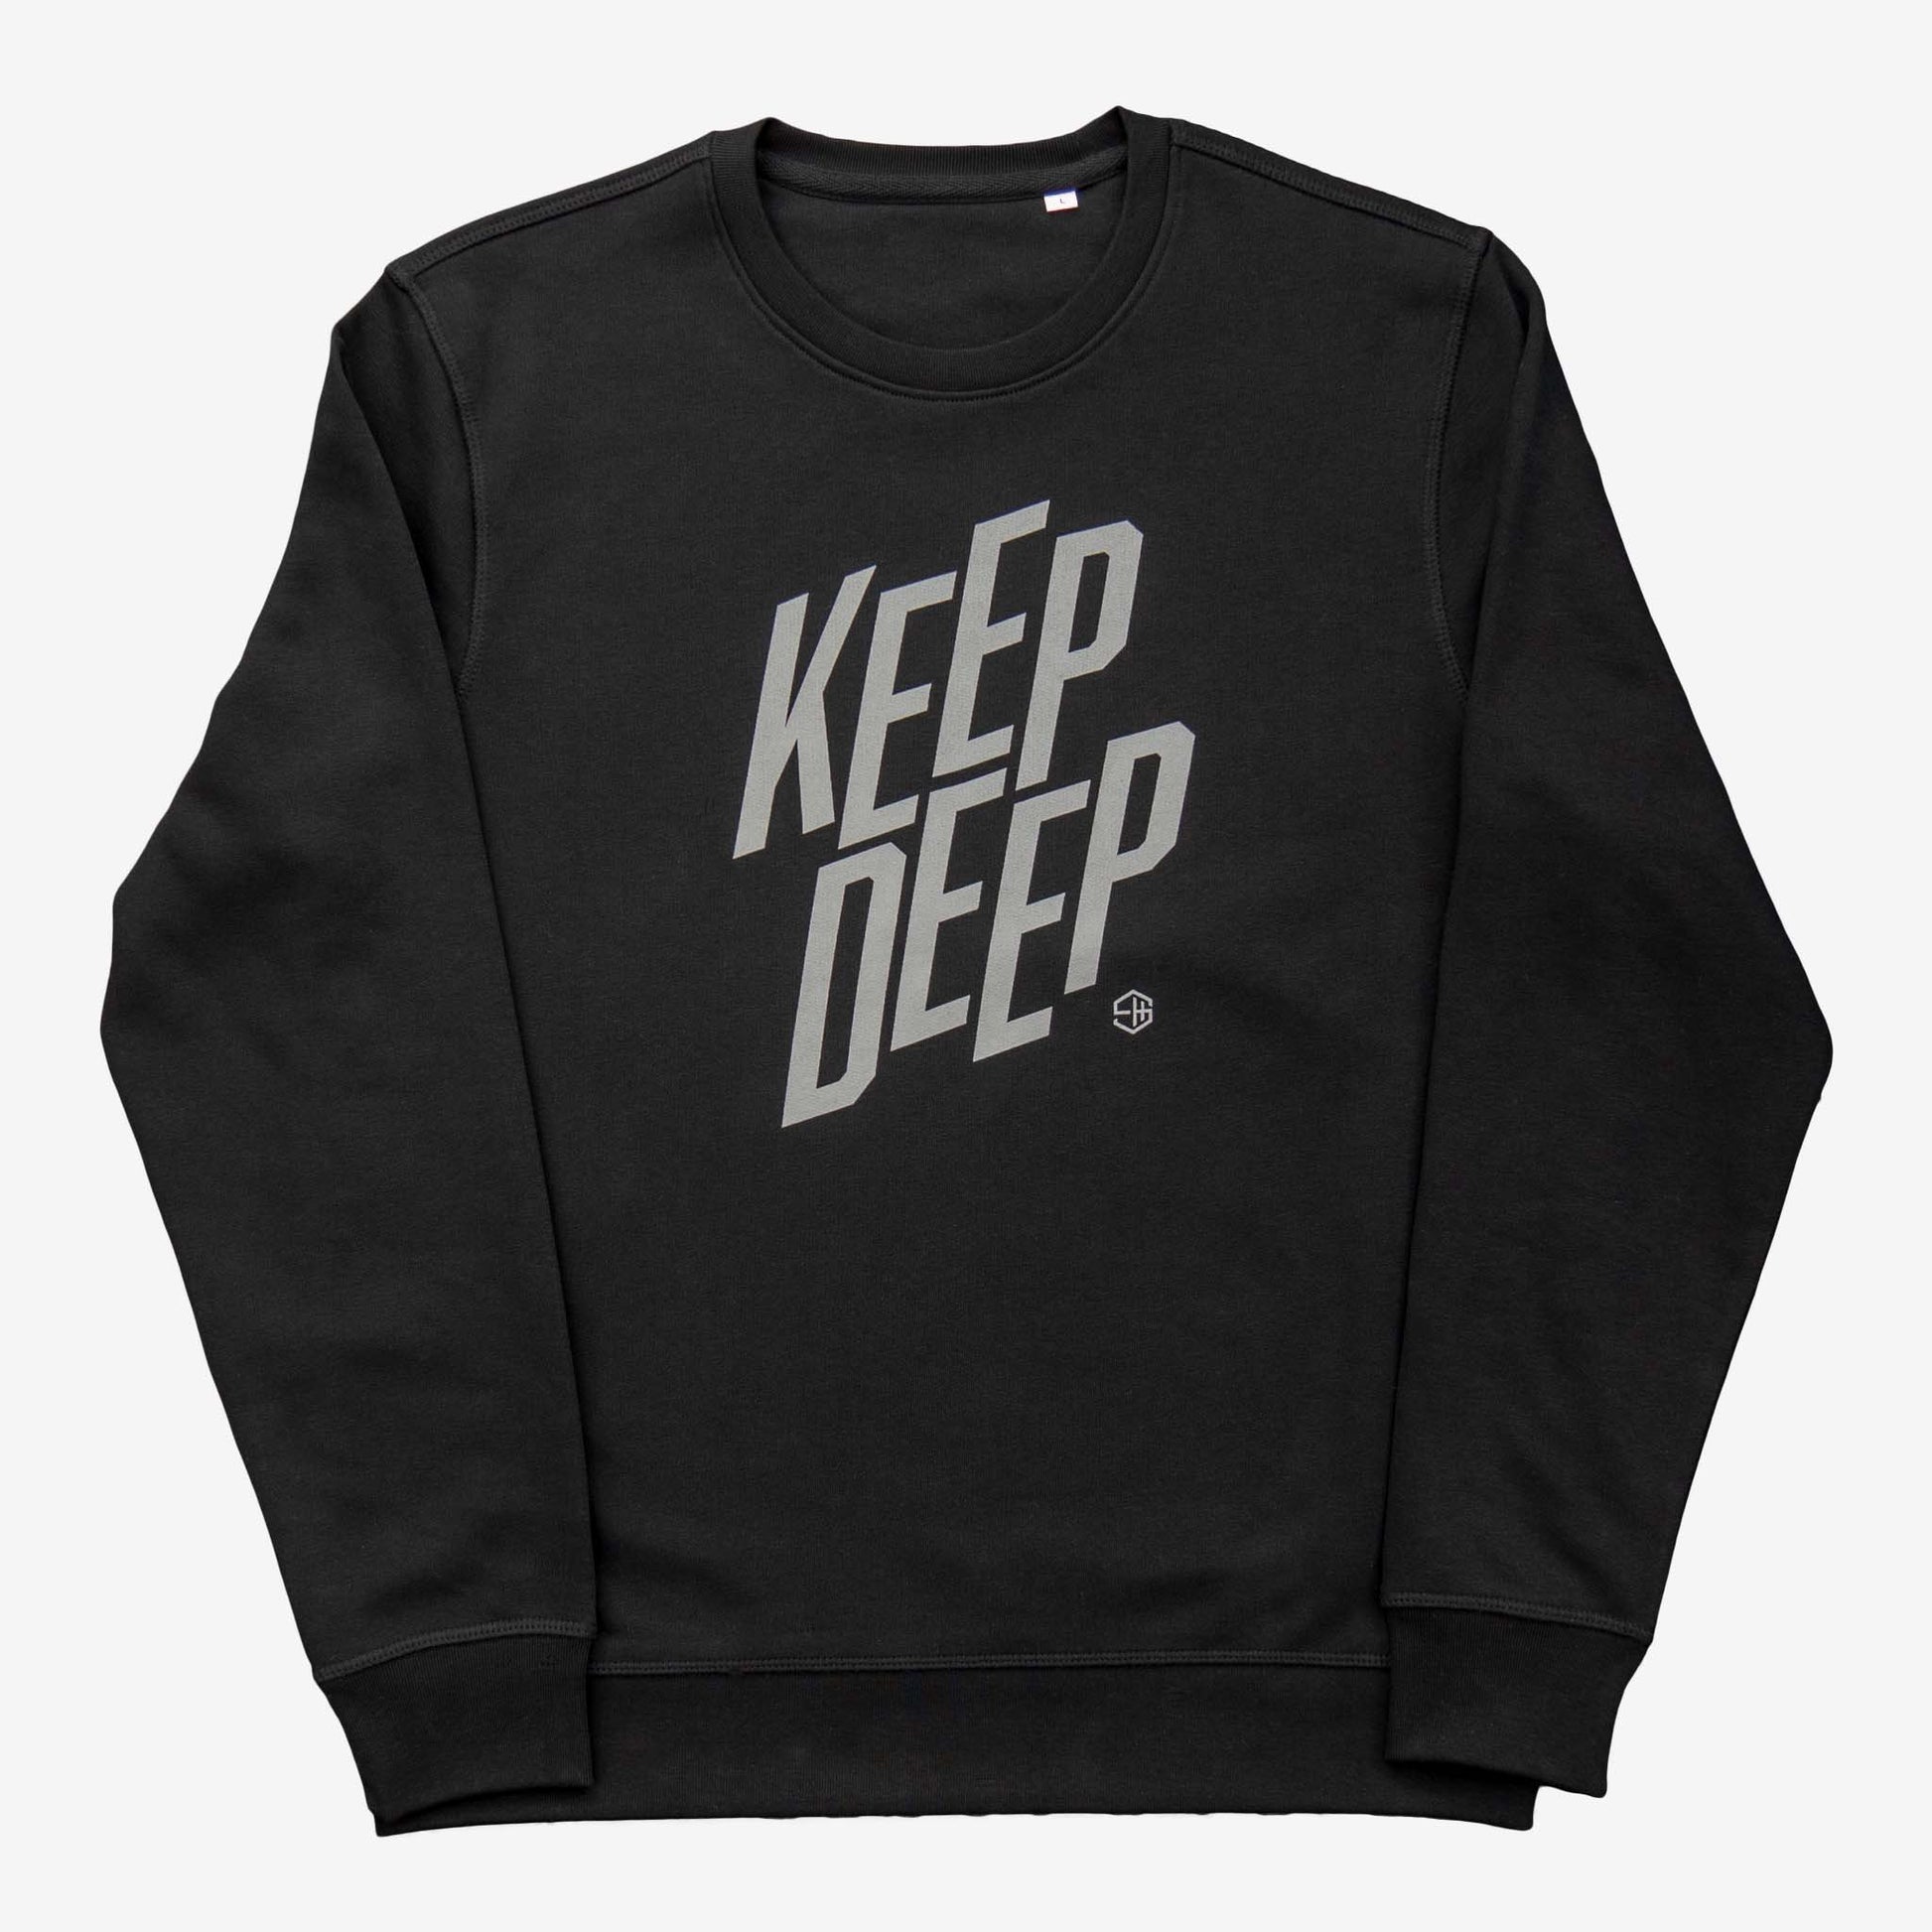 Keep Deep House Music Sweatshirt Black